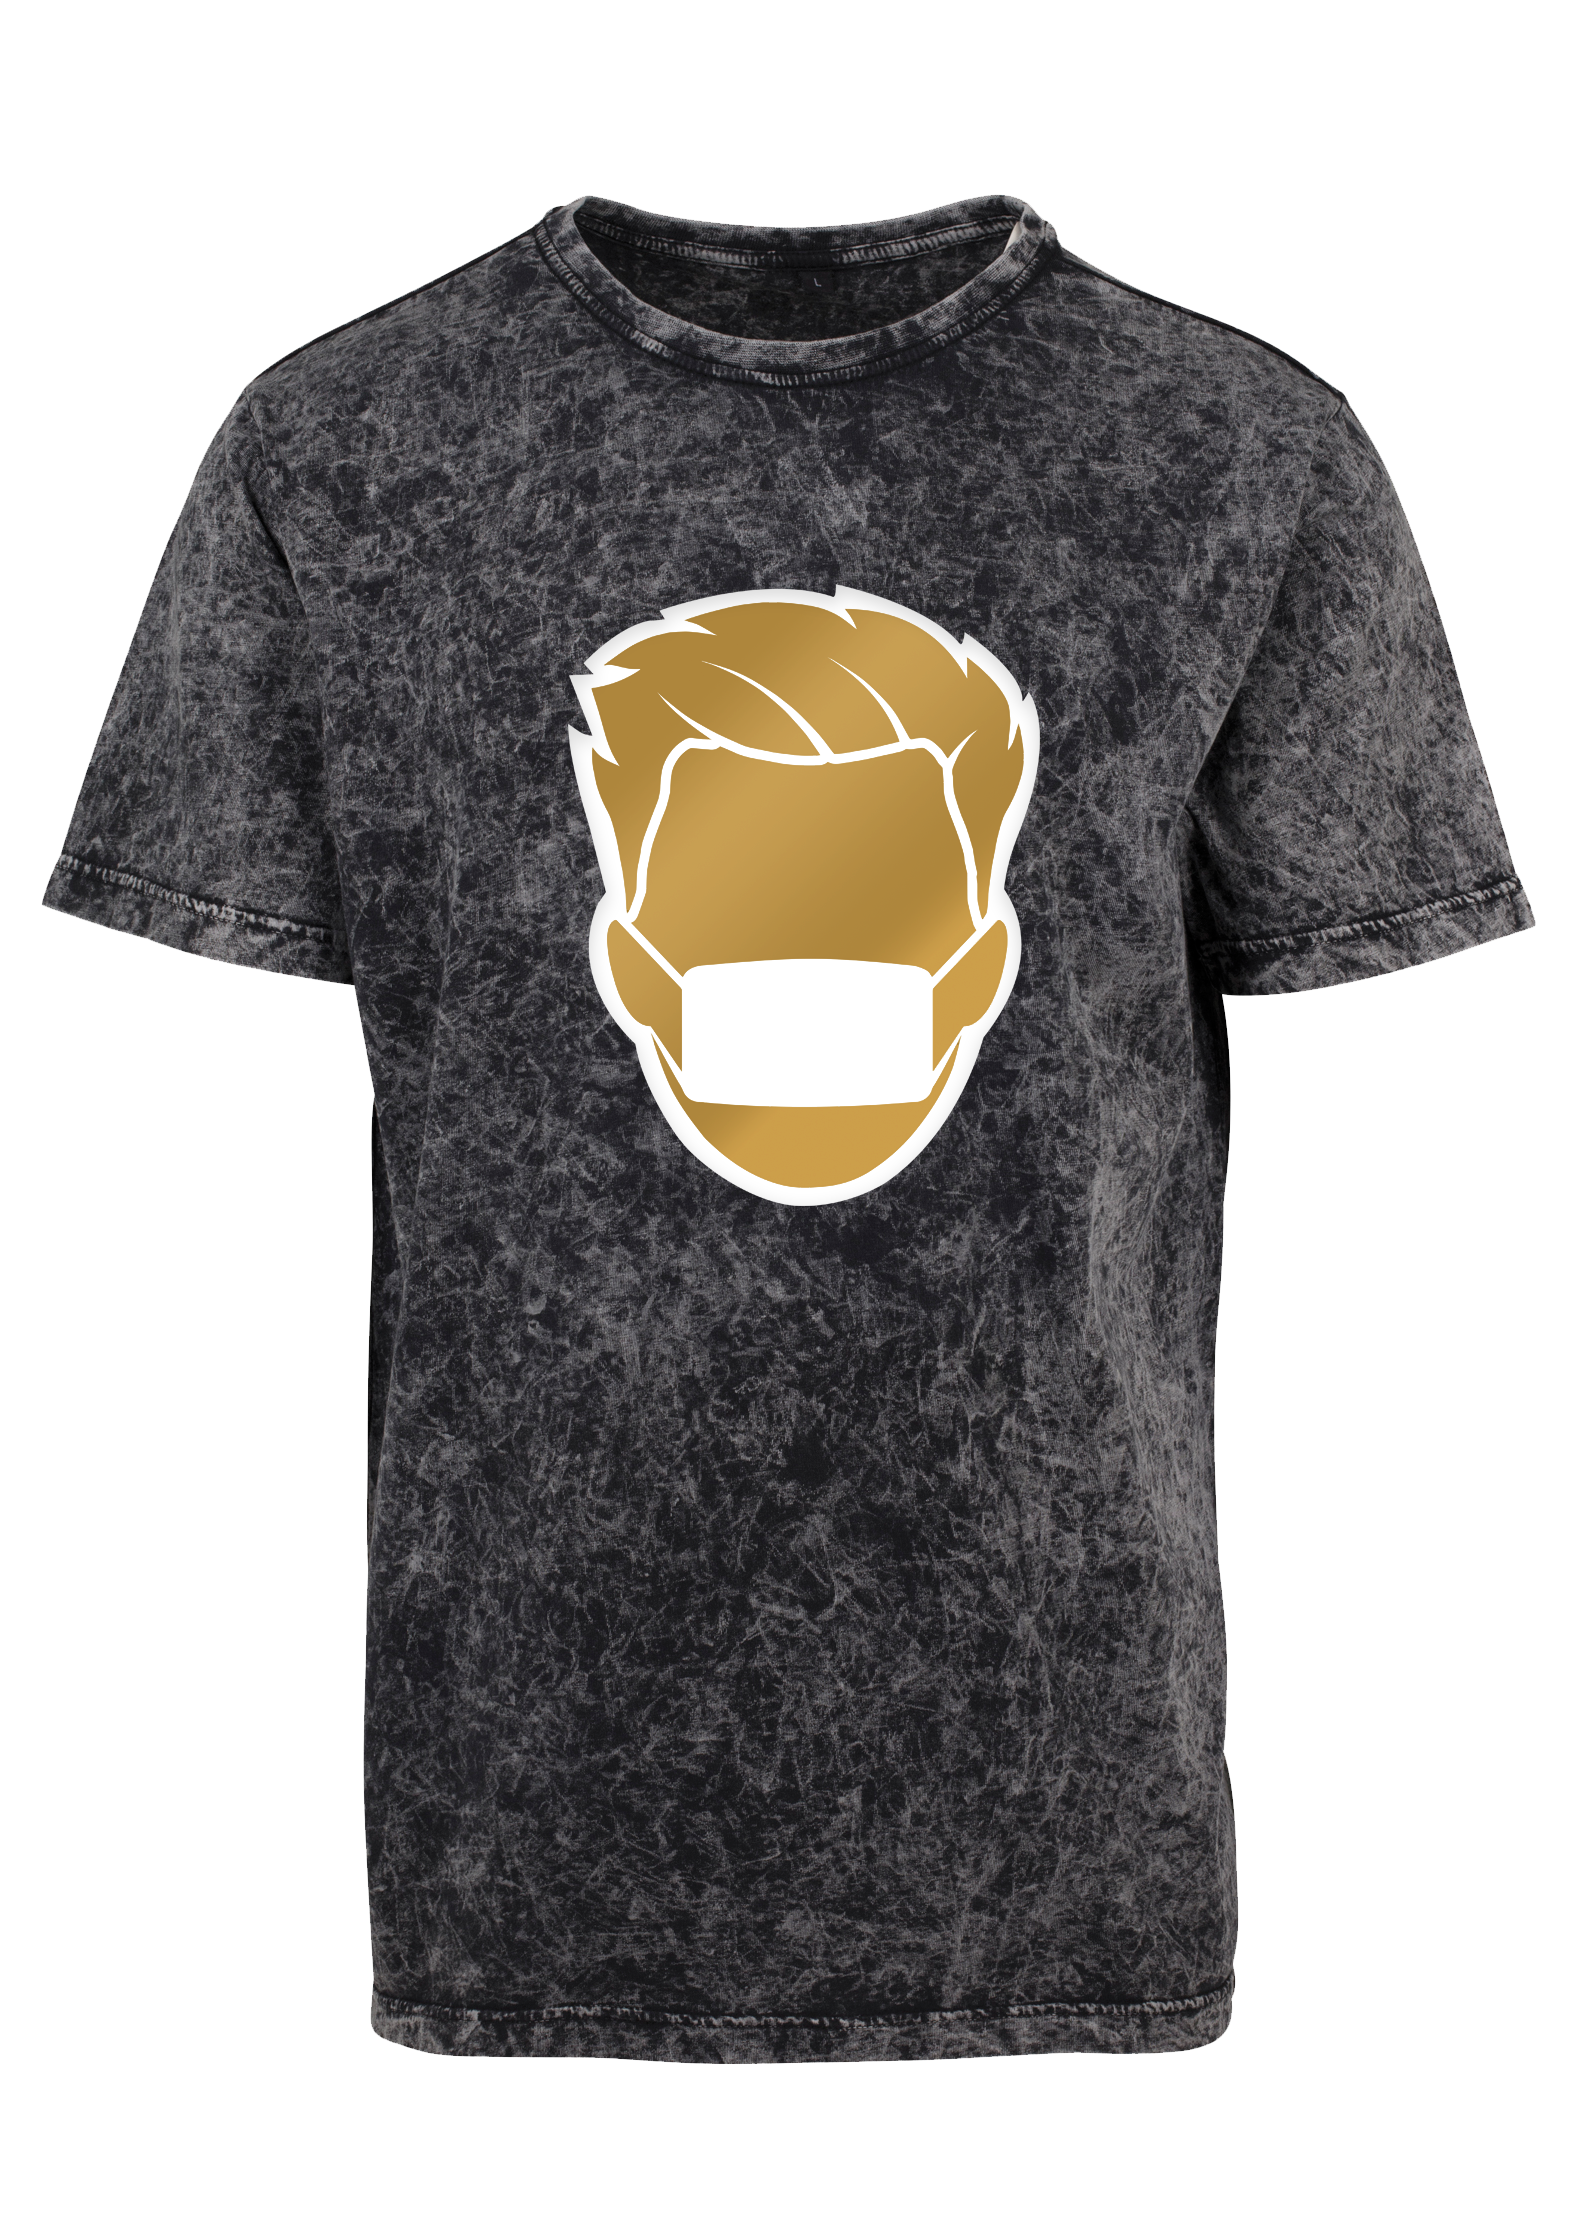 Goldmoon darkgrey white T-Shirt